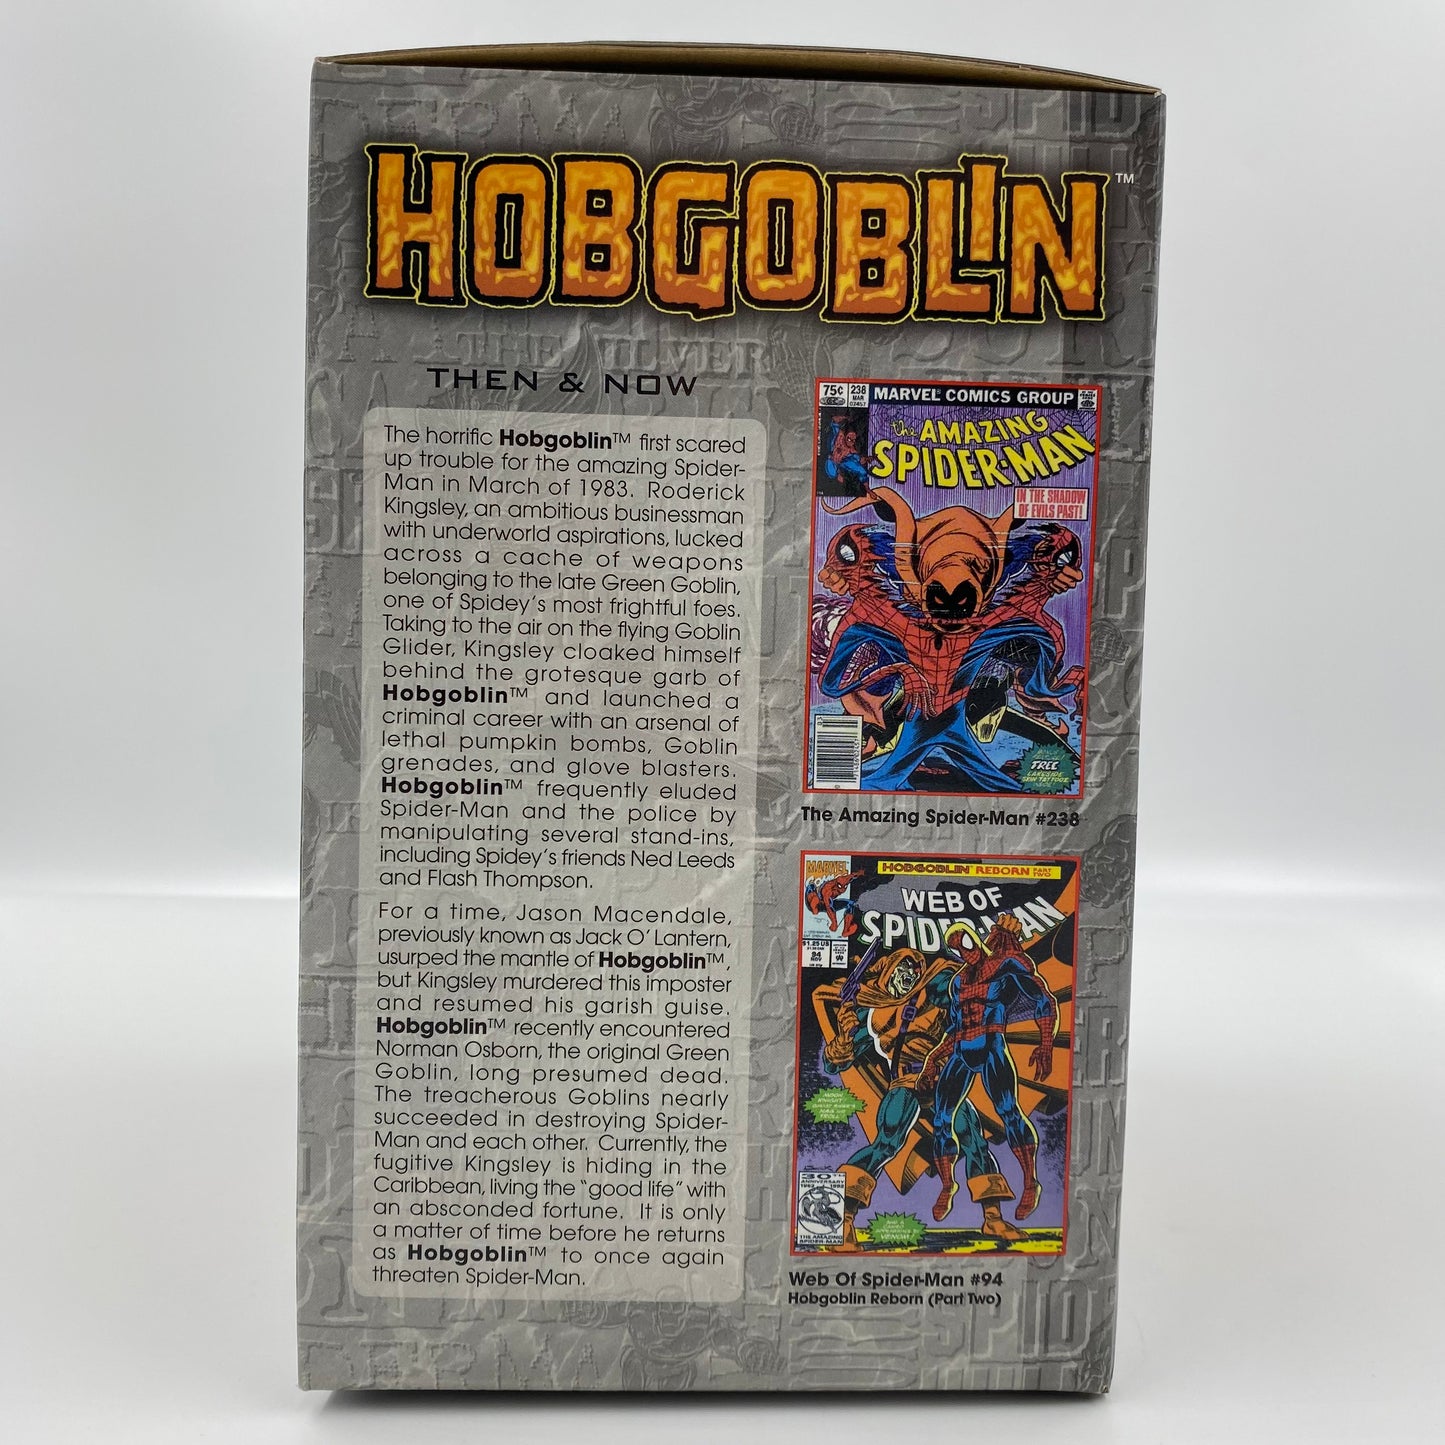 Hobgoblin Marvel mini-bust (2005) Bowen Designs